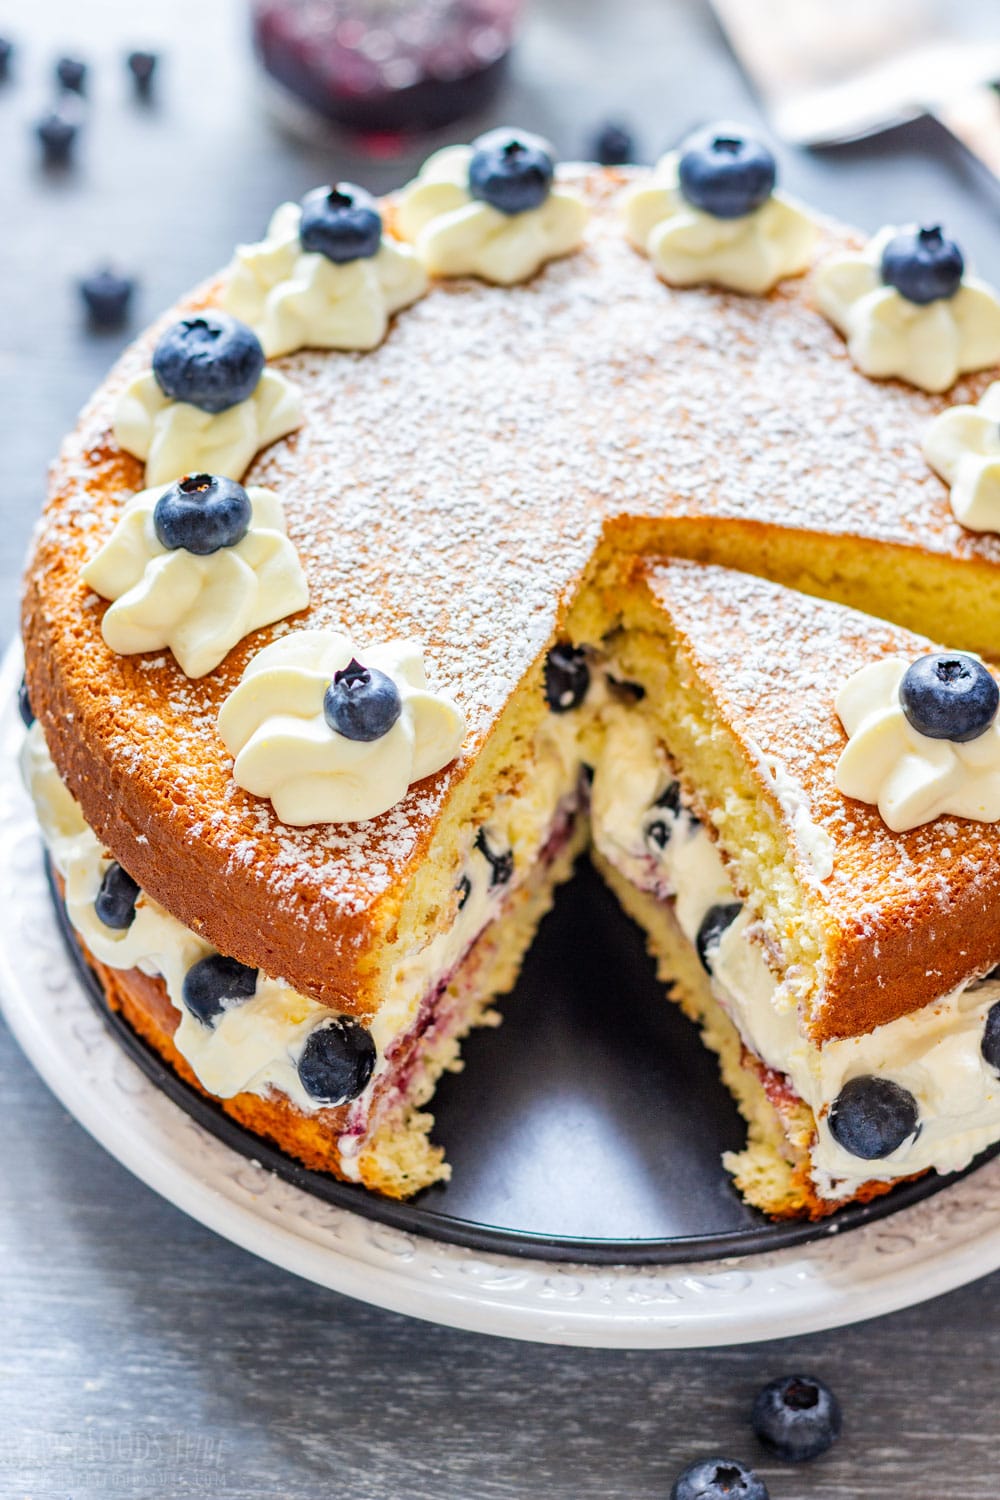 Homemade blueberry sponge cake with cream and fresh blue berries.